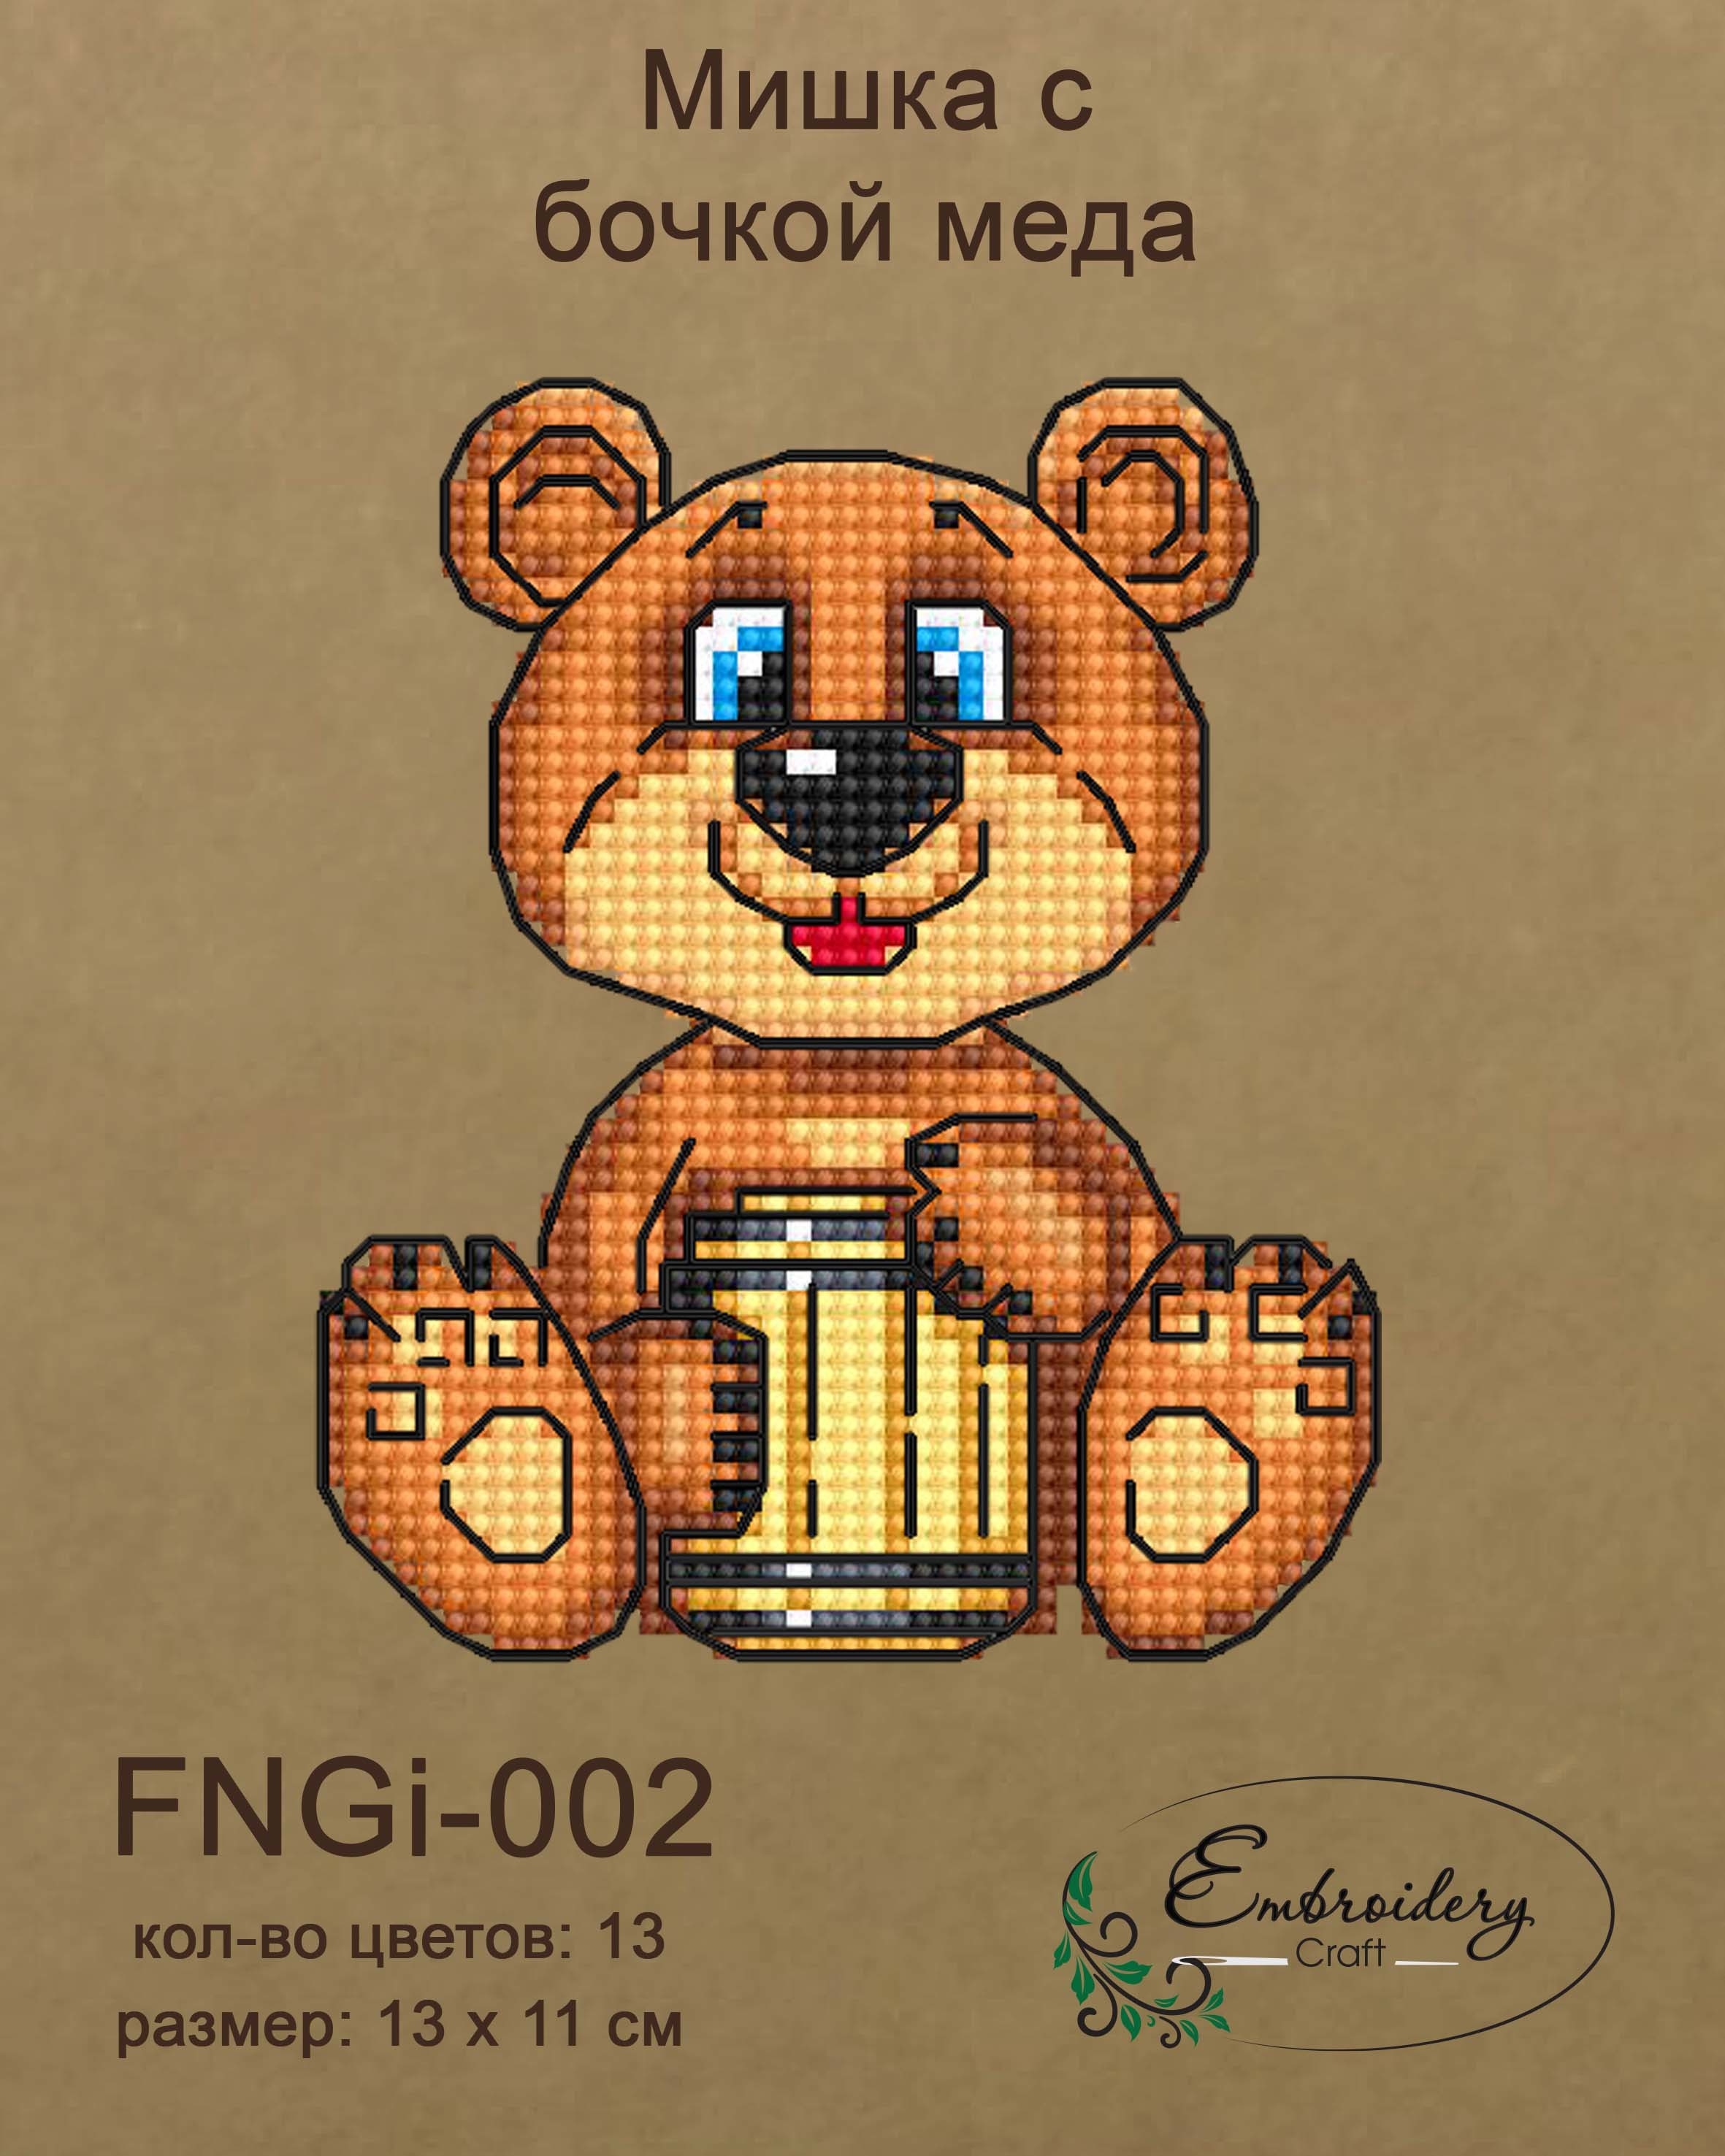 FNNGi-002 Мишка с бочкой меда